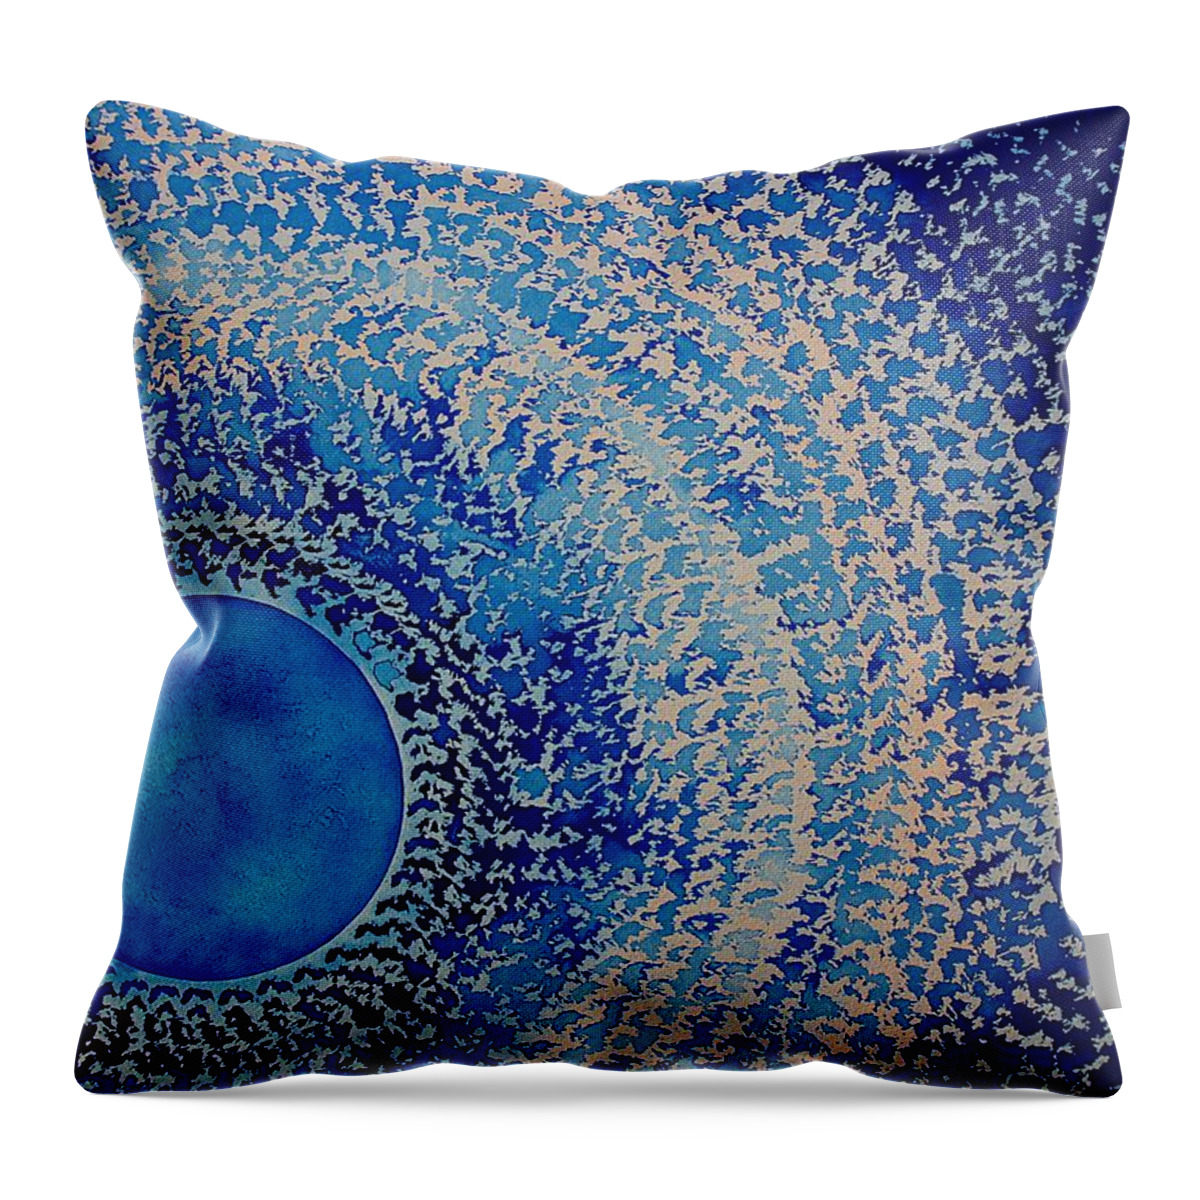 Blue Kachina Throw Pillow featuring the painting Blue Kachina original painting by Sol Luckman